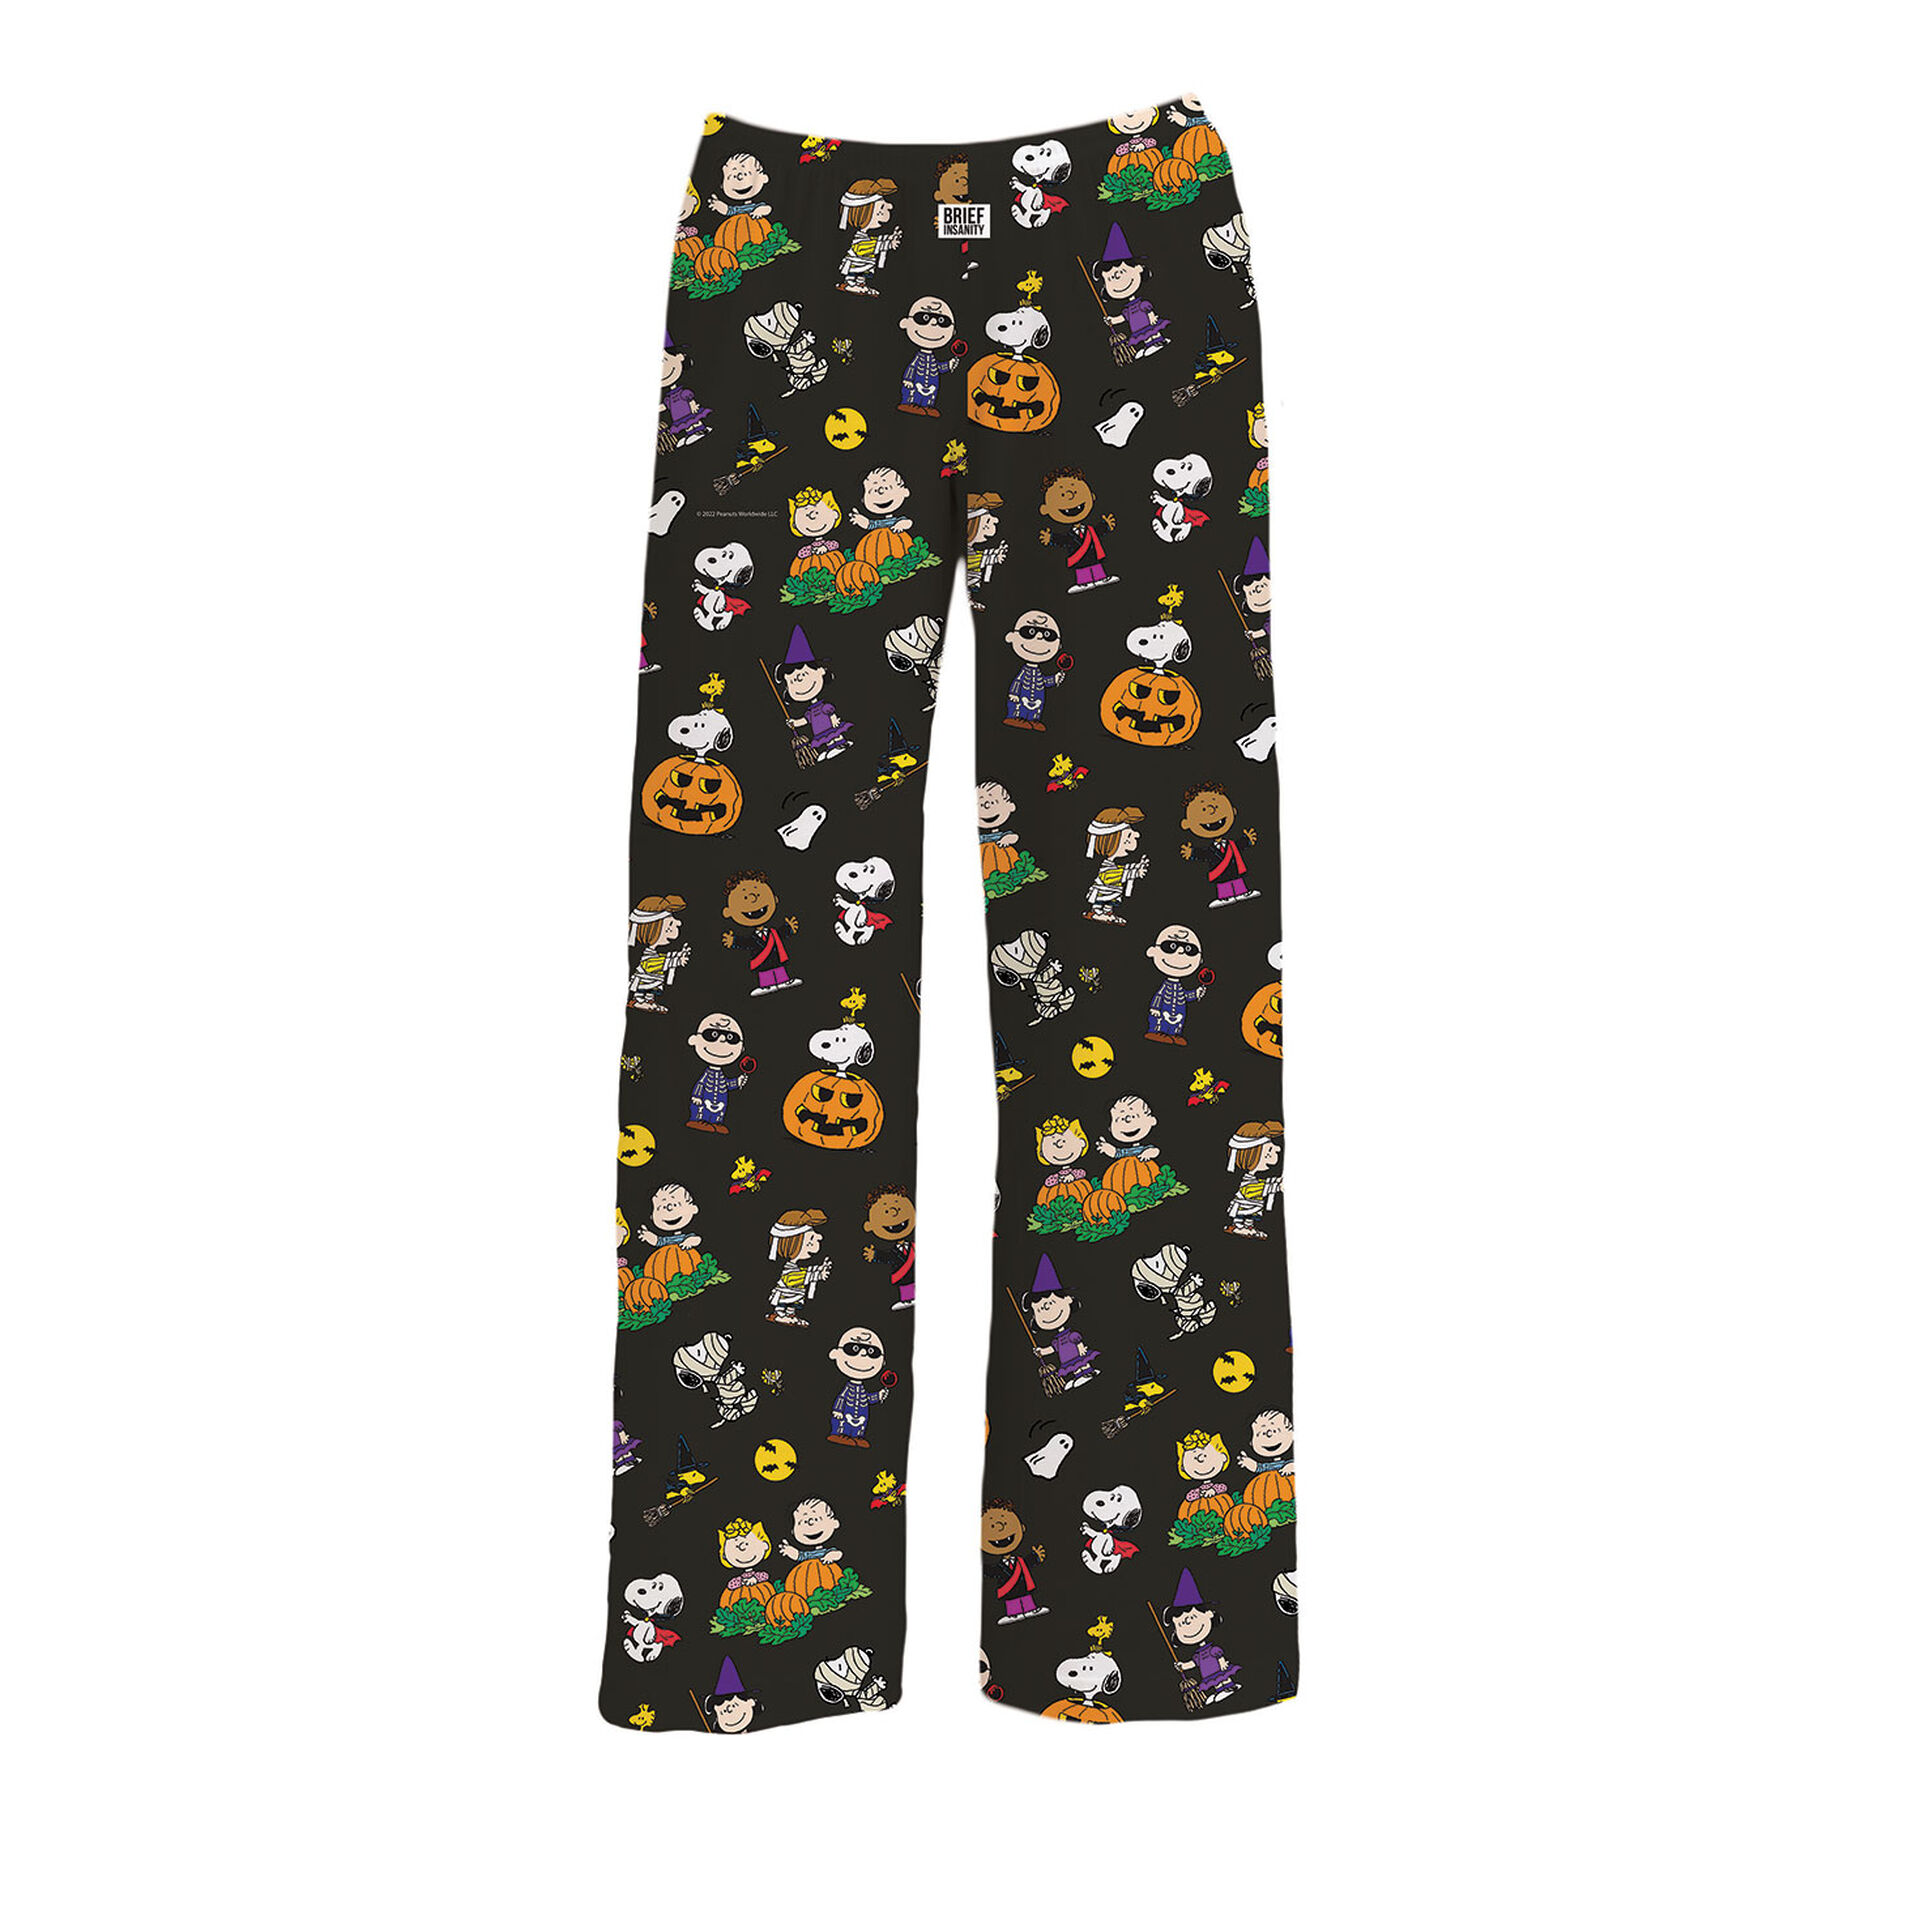 Brief Insanity Peanuts Black Halloween Lounge Pants - Loungewear - Hallmark